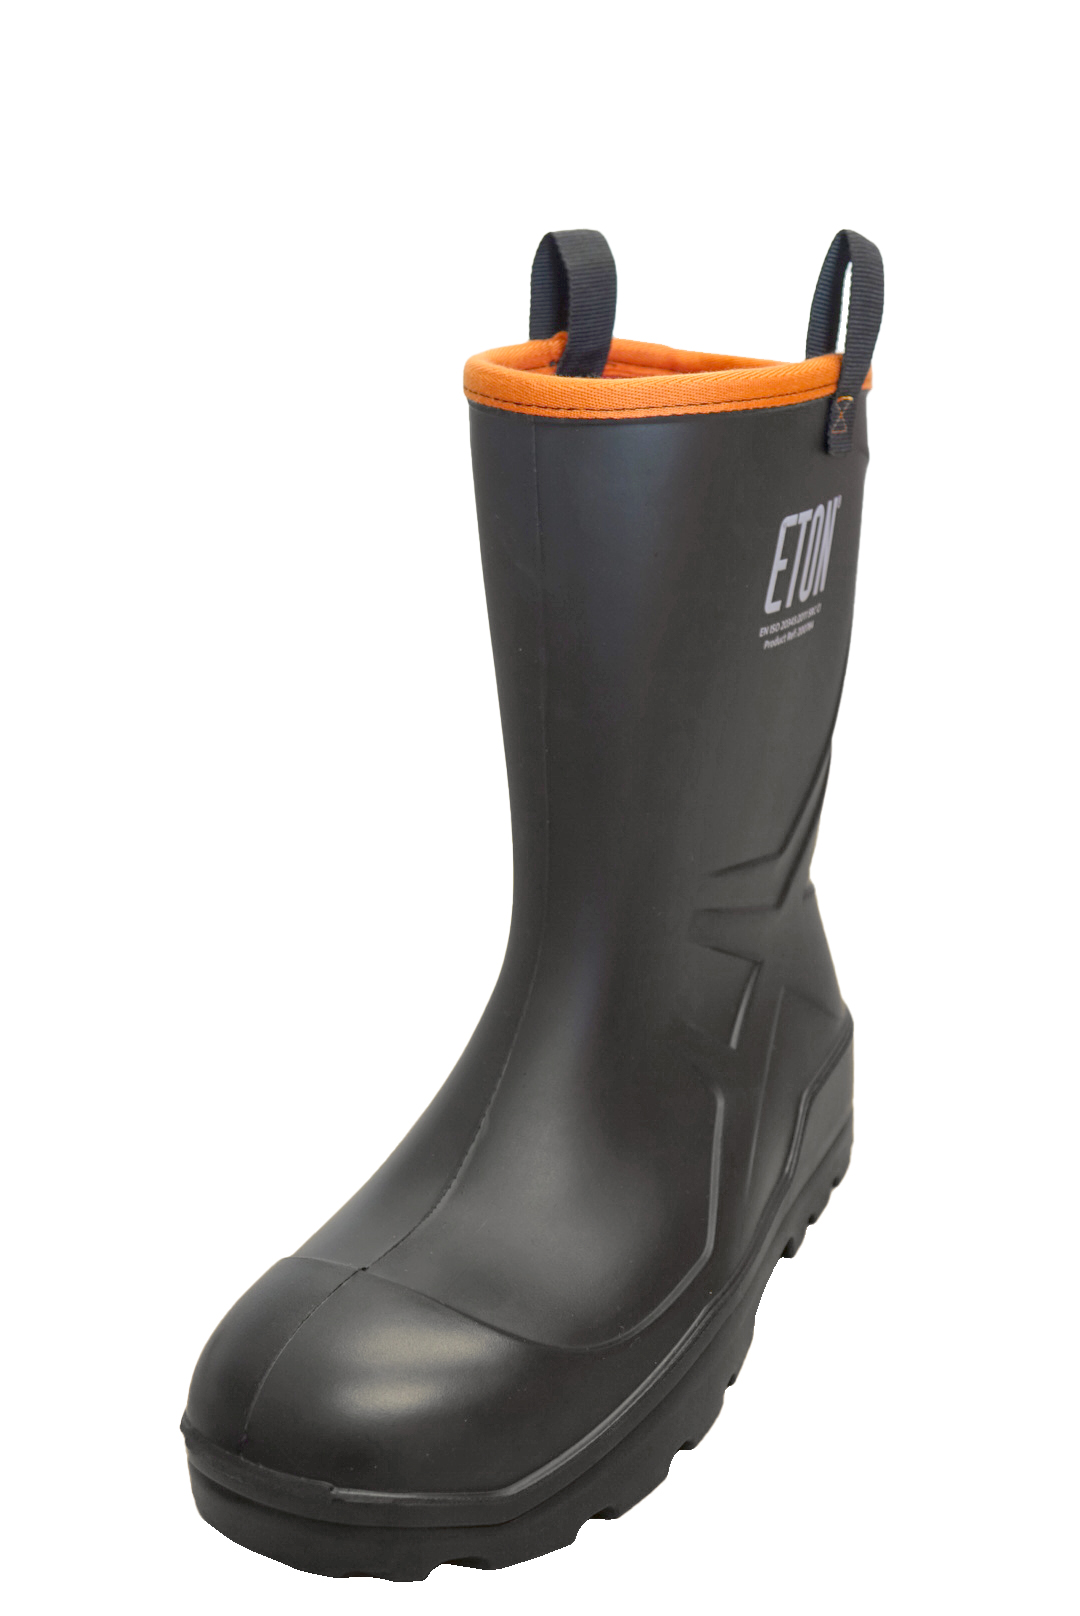 ETON DuraBoot Rigger Full Safety Boot - Size 4